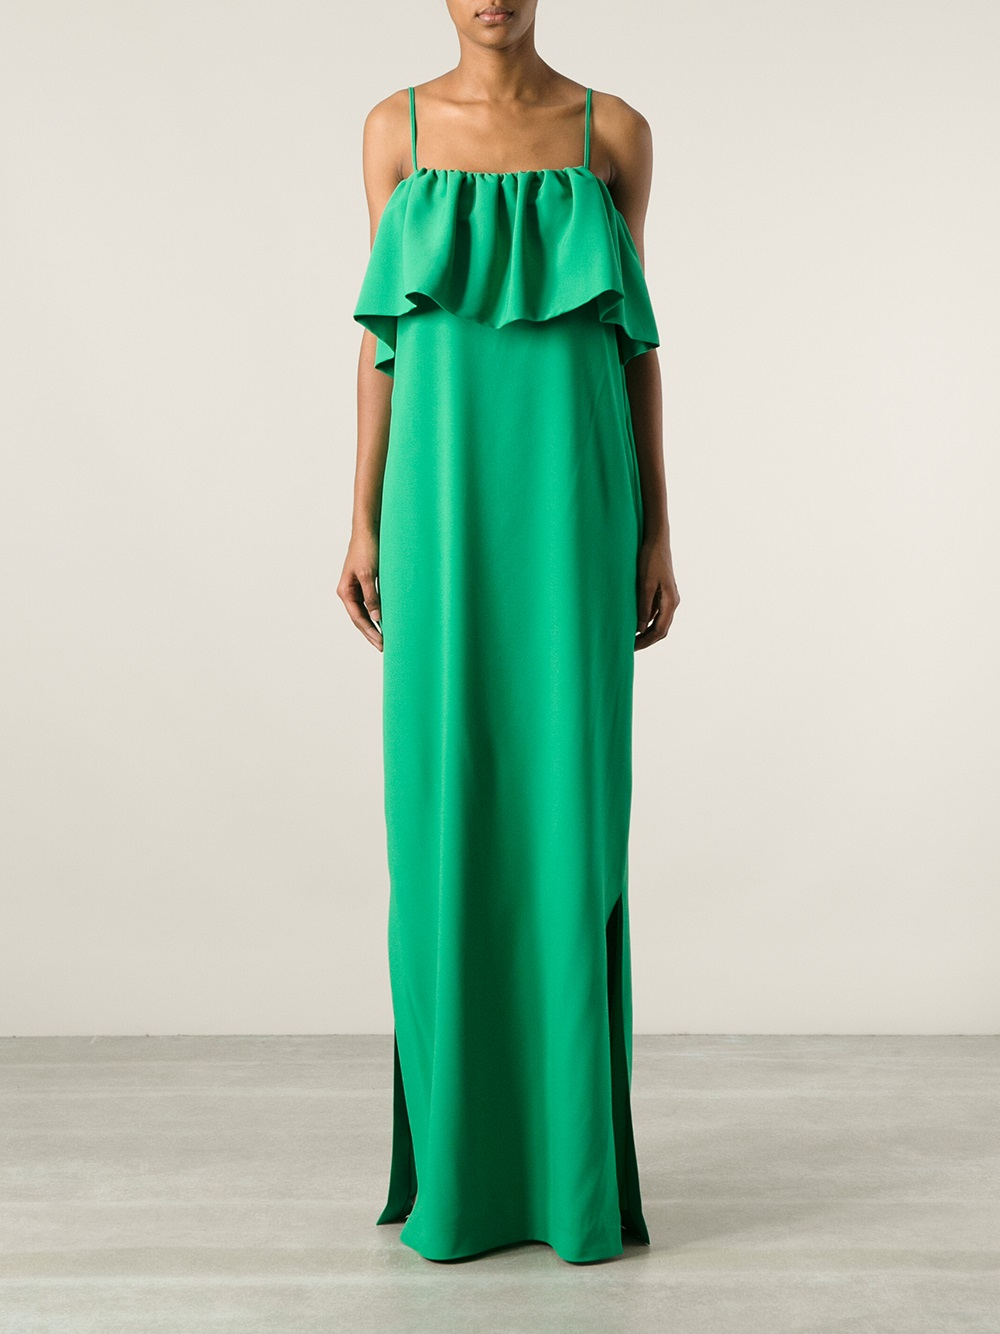 MSGM Ruffle Top Flap Dress in Green Lyst